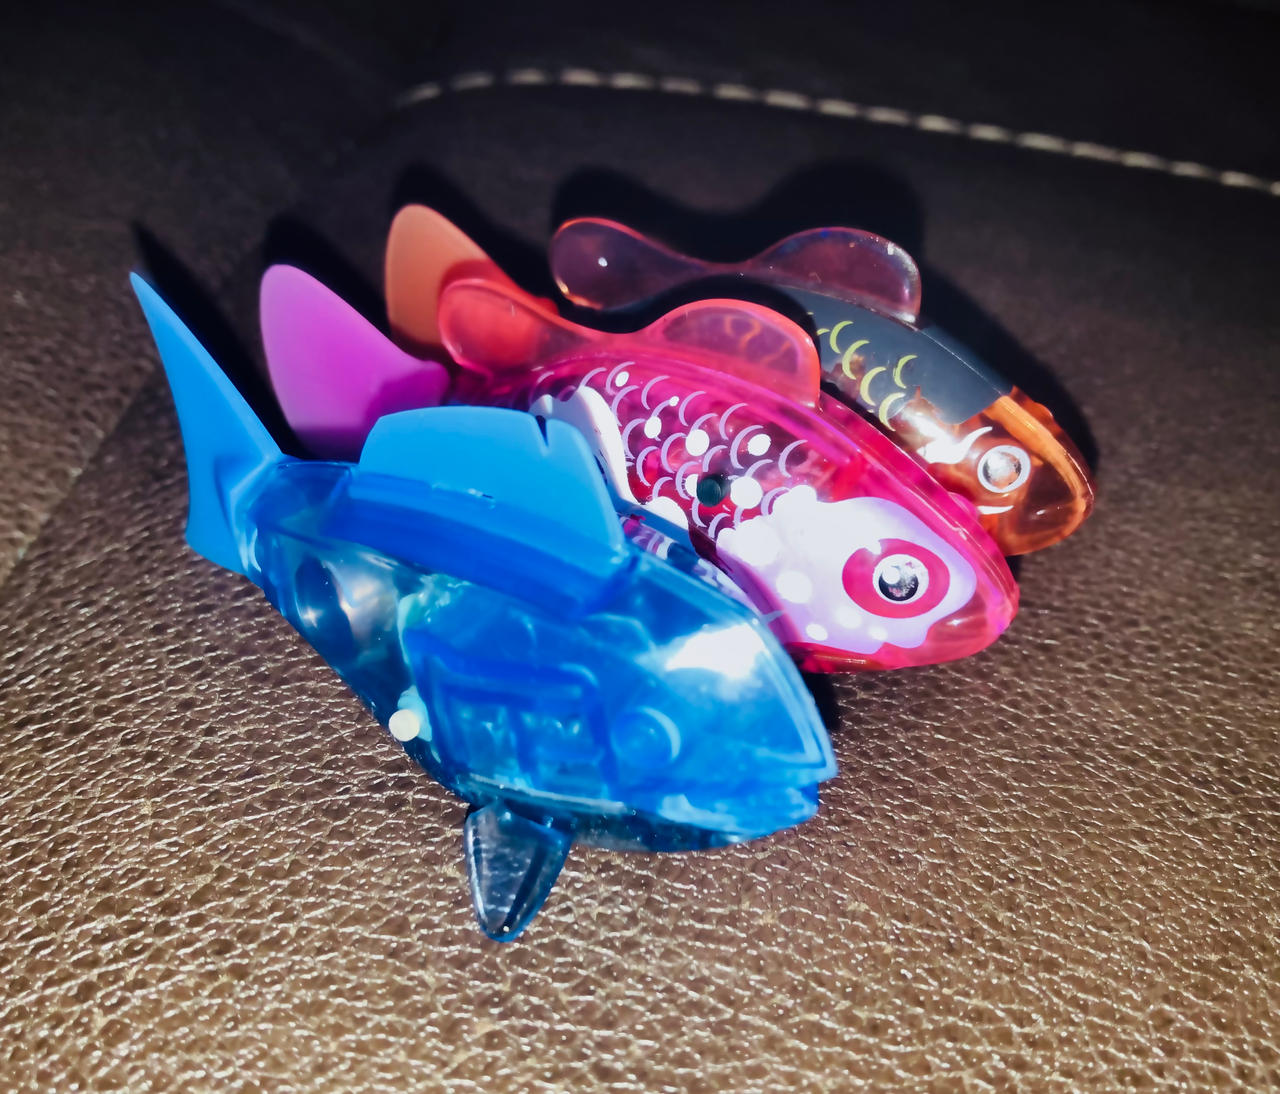 Robo fish red pink and Hexbug Aquabot blue fish by shark123123 on DeviantArt